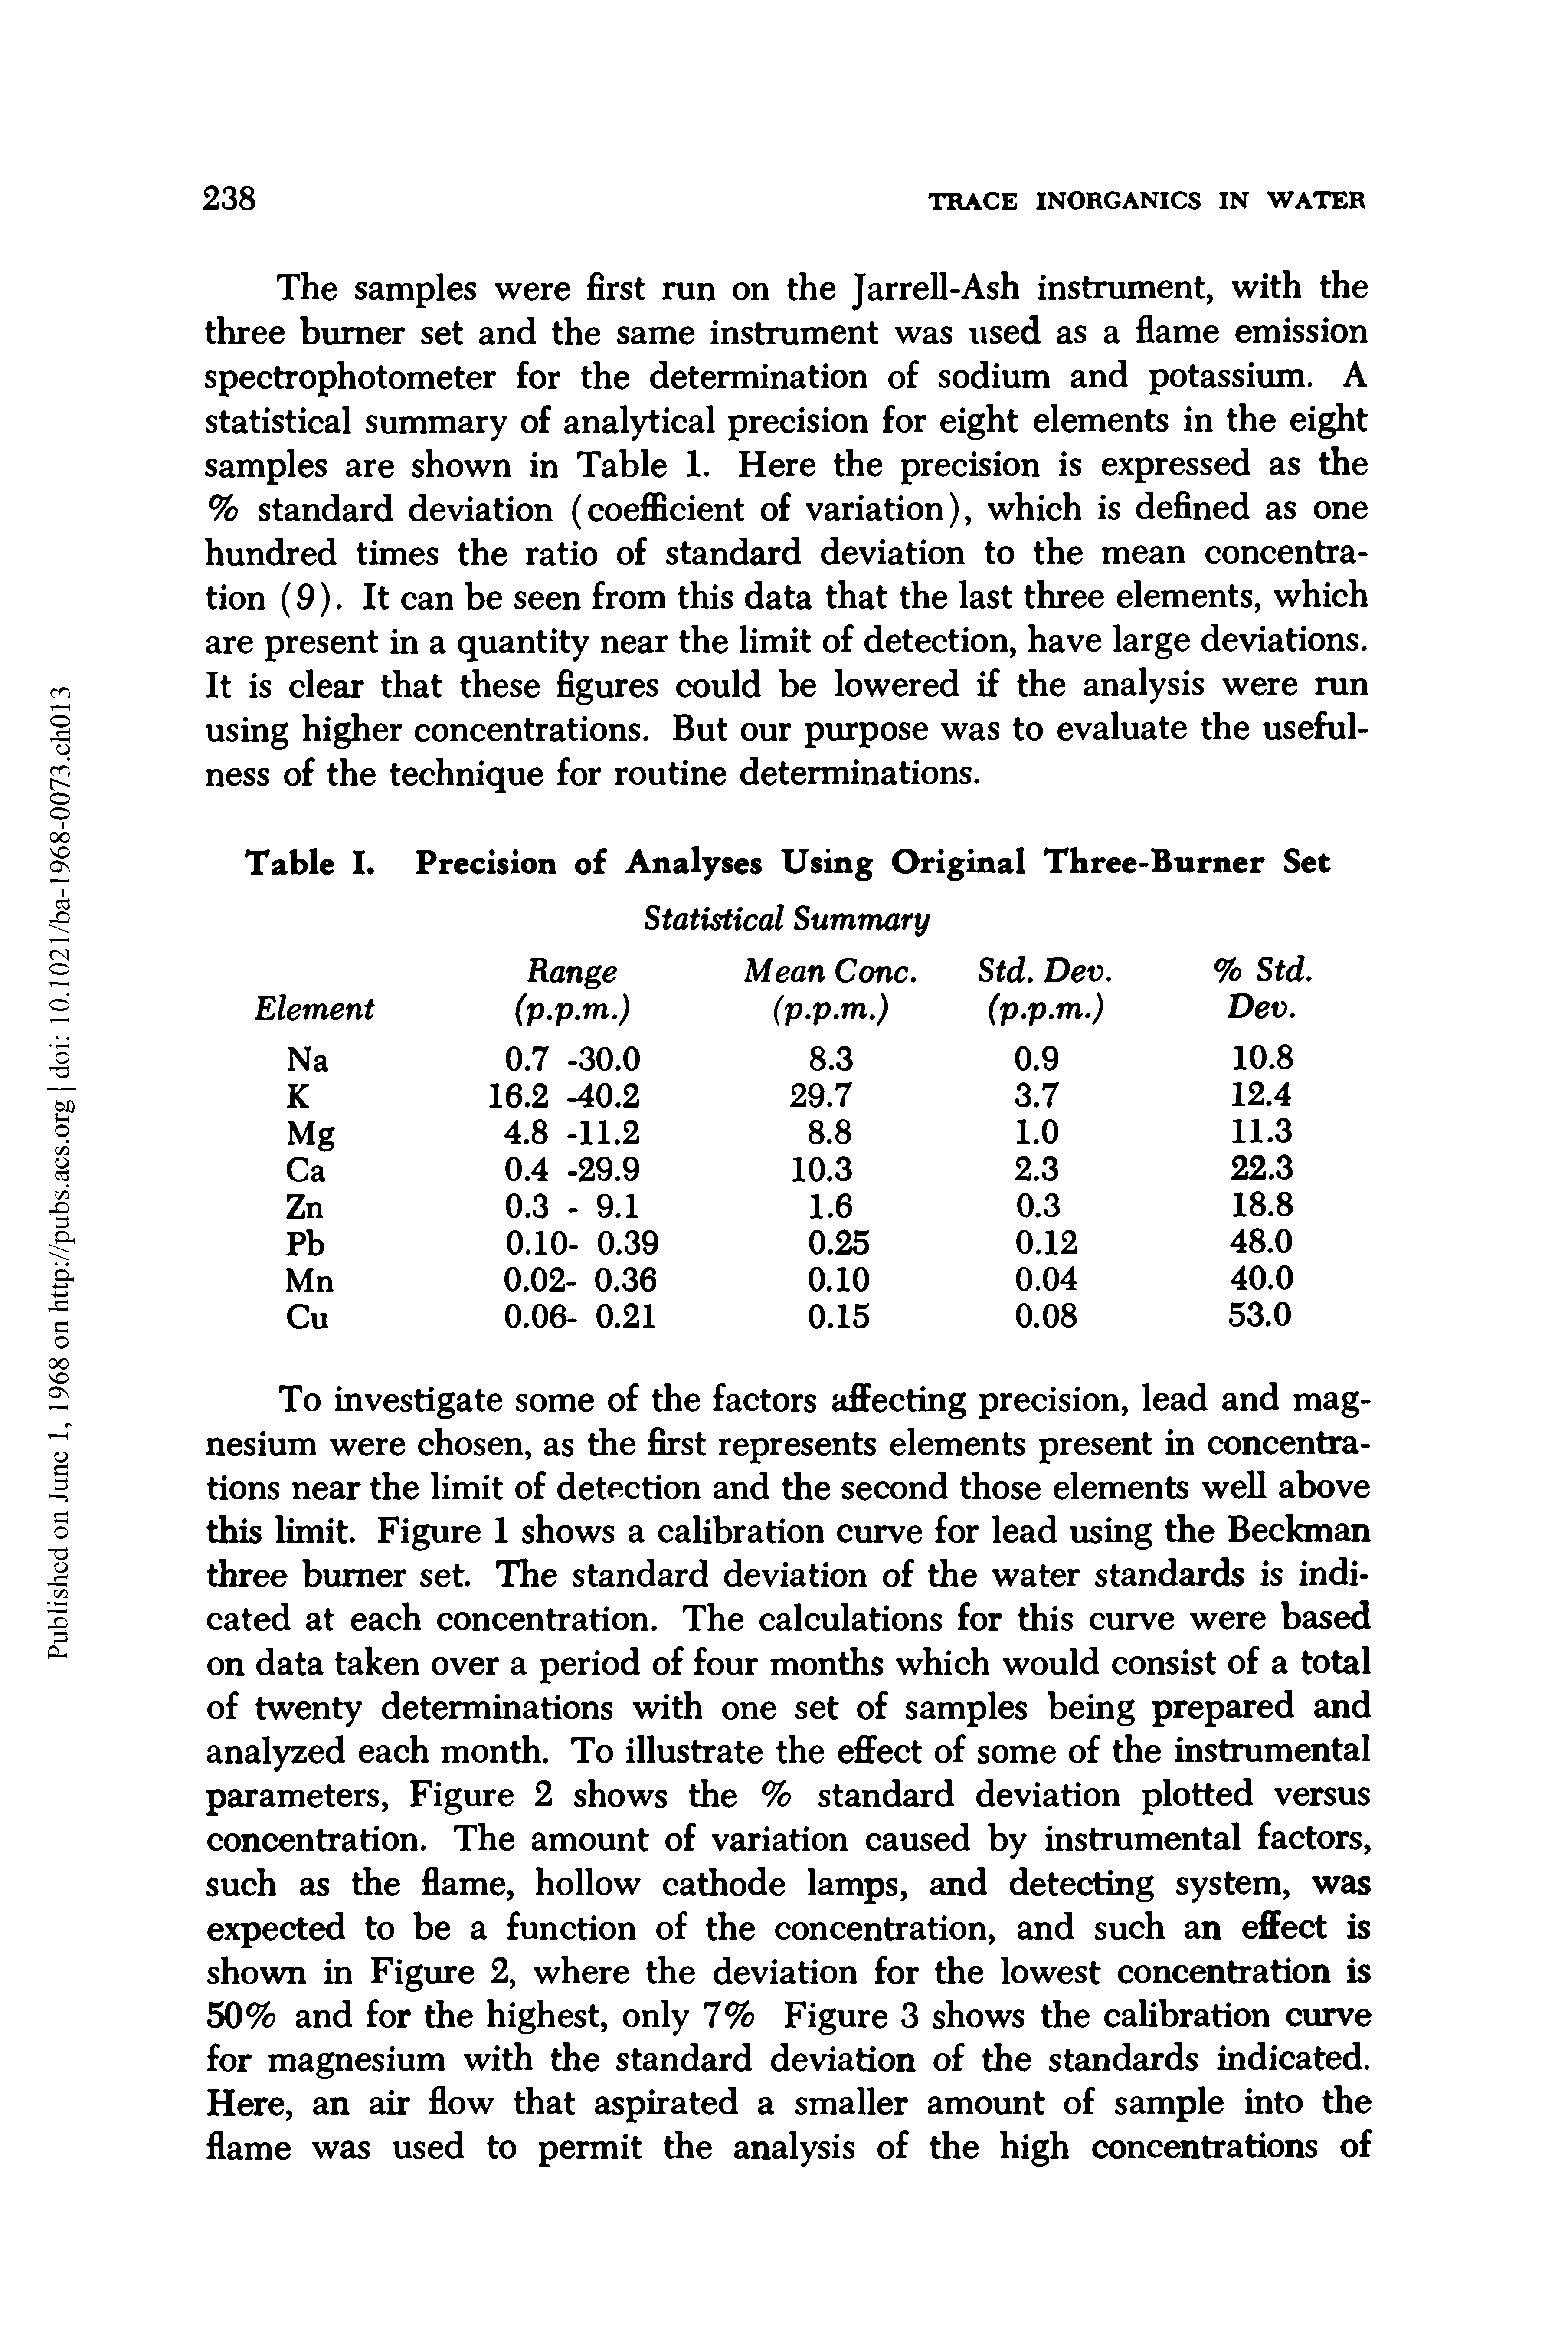 Table I. Precision of Analyses Using Original Three-Burner Set...